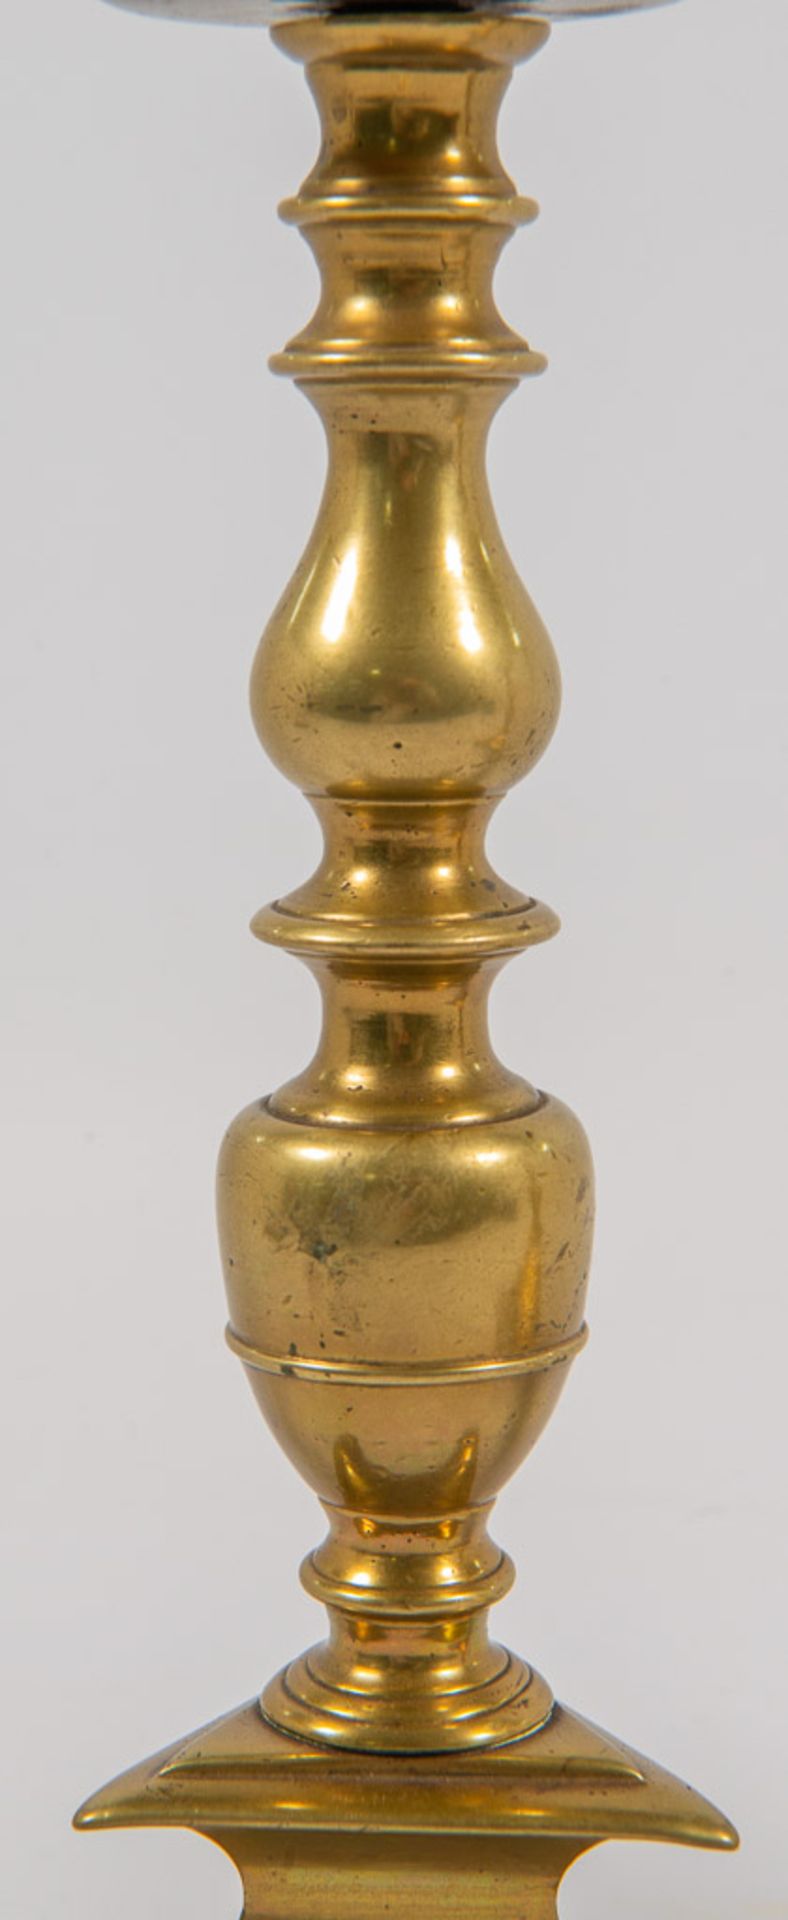 Pair of bronze candelabra, 18th century - Image 5 of 10